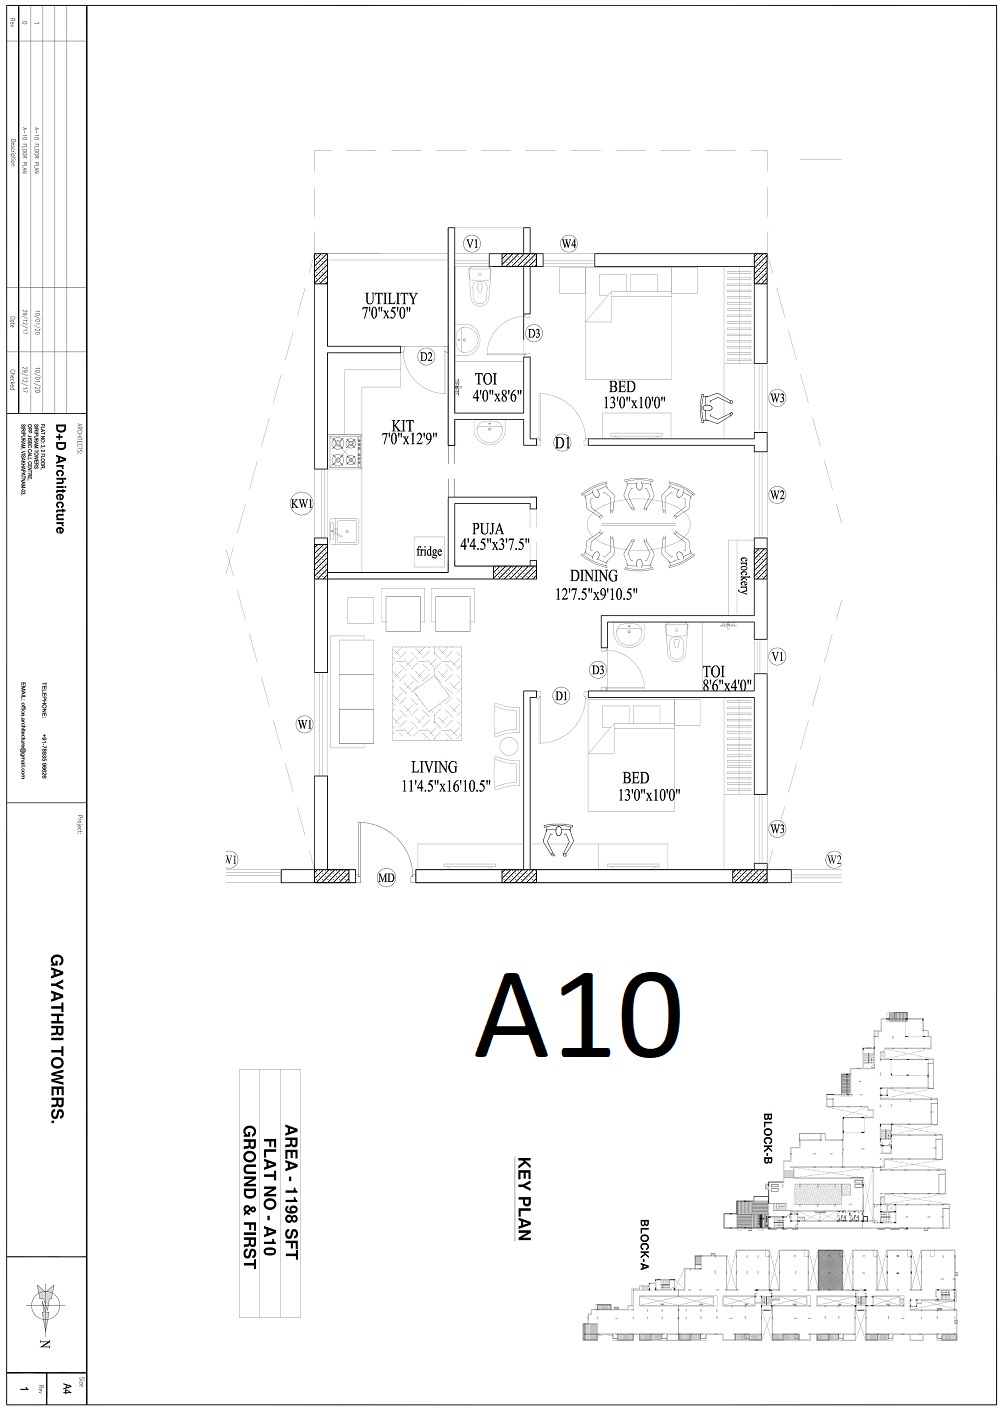 A10 - Floor Plan